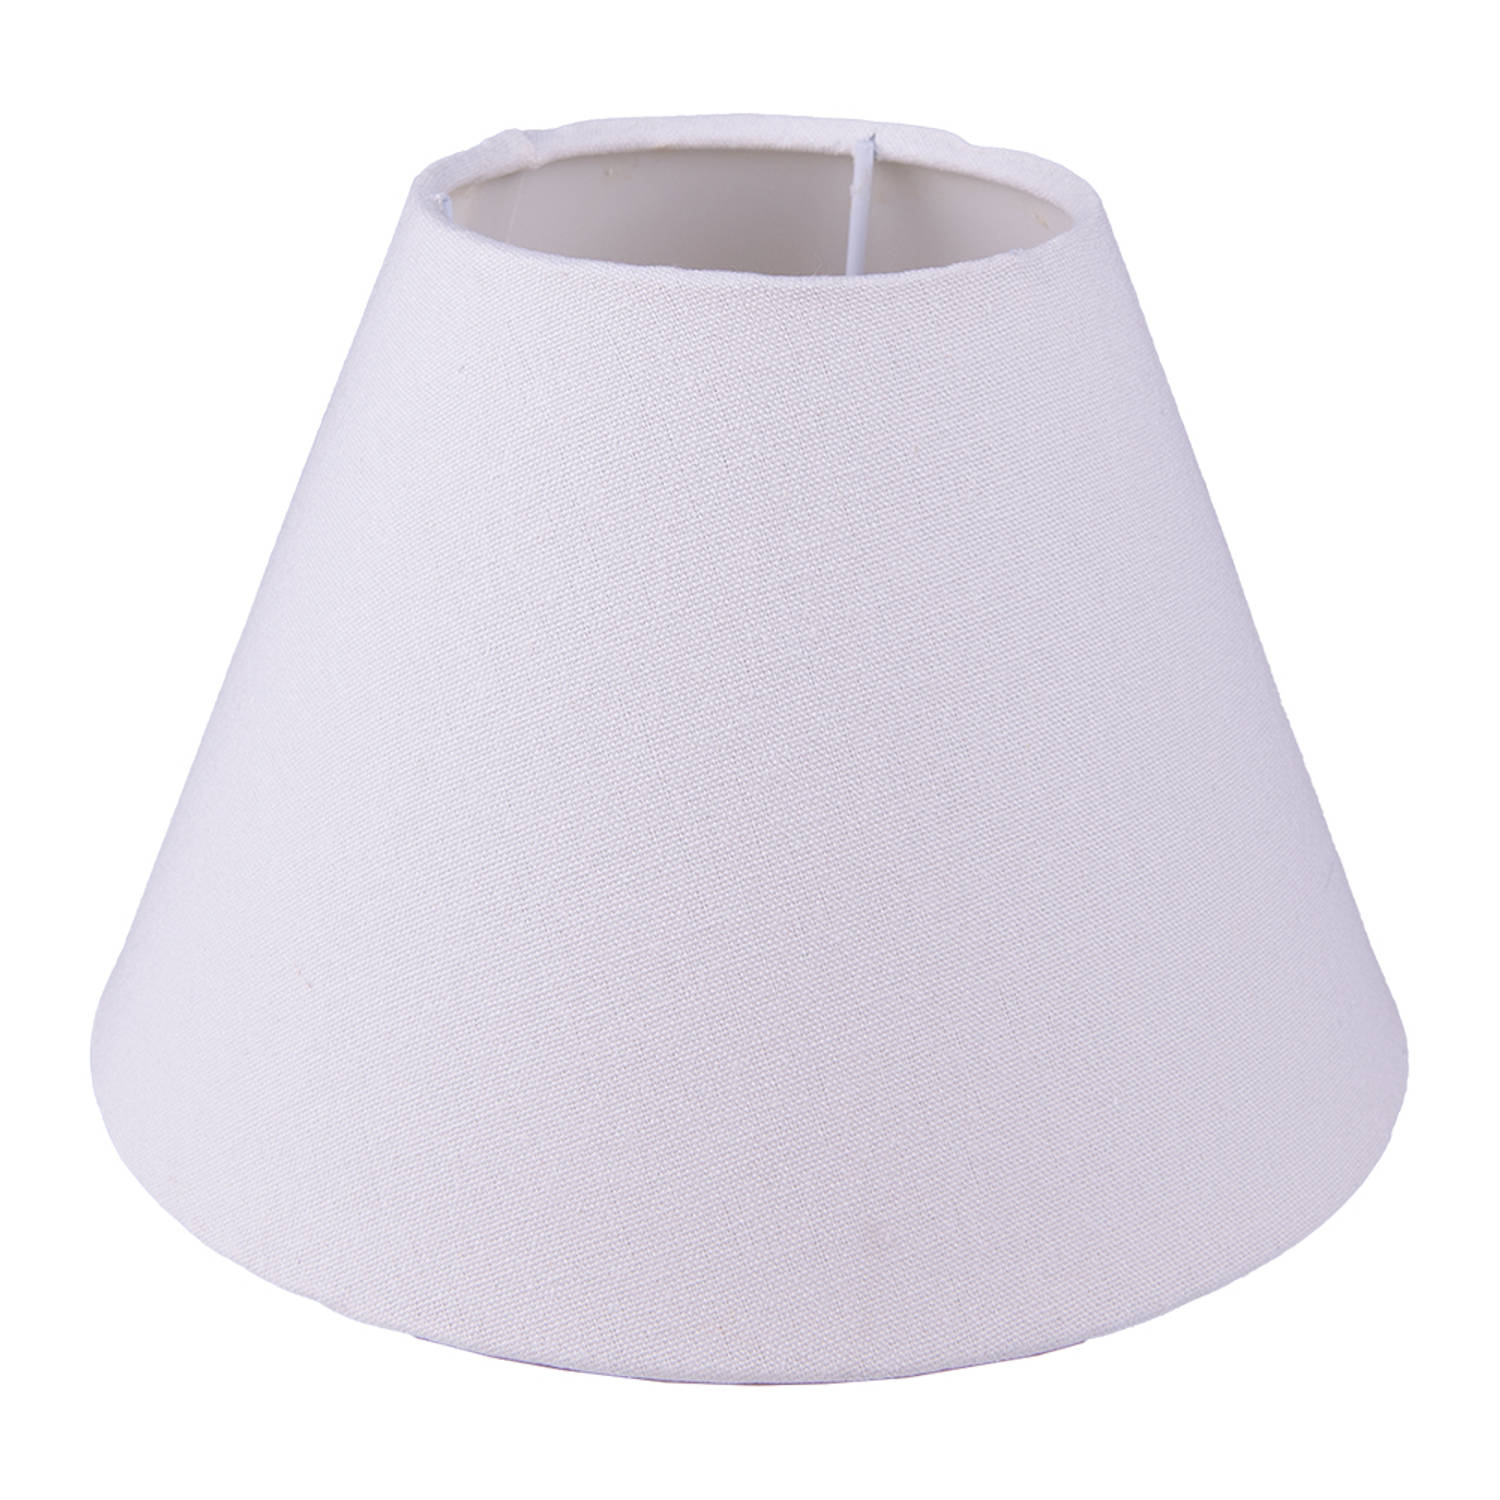 HAES DECO - Lampenkap - Natural Cosy - wit rond - formaat Ø 23x15 cm, voor Fitting E27 - Tafellamp, Hanglamp